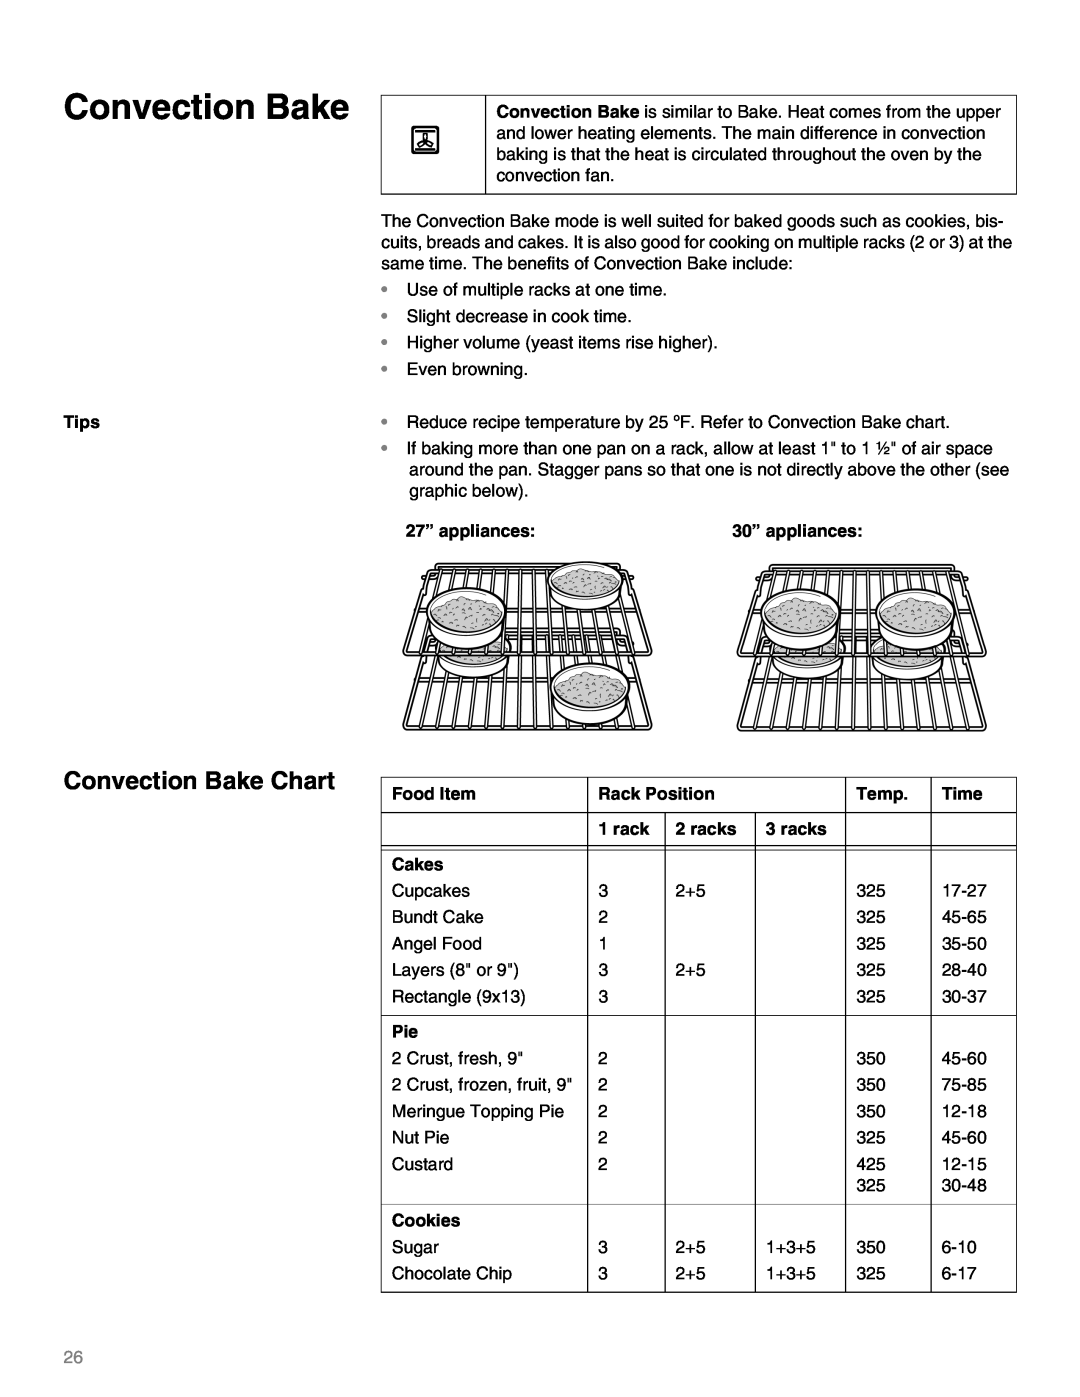 Thermador M271E Convection Bake, Tips, 27” appliances, 30” appliances, Food Item, Rack Position, Temp, Time, racks 